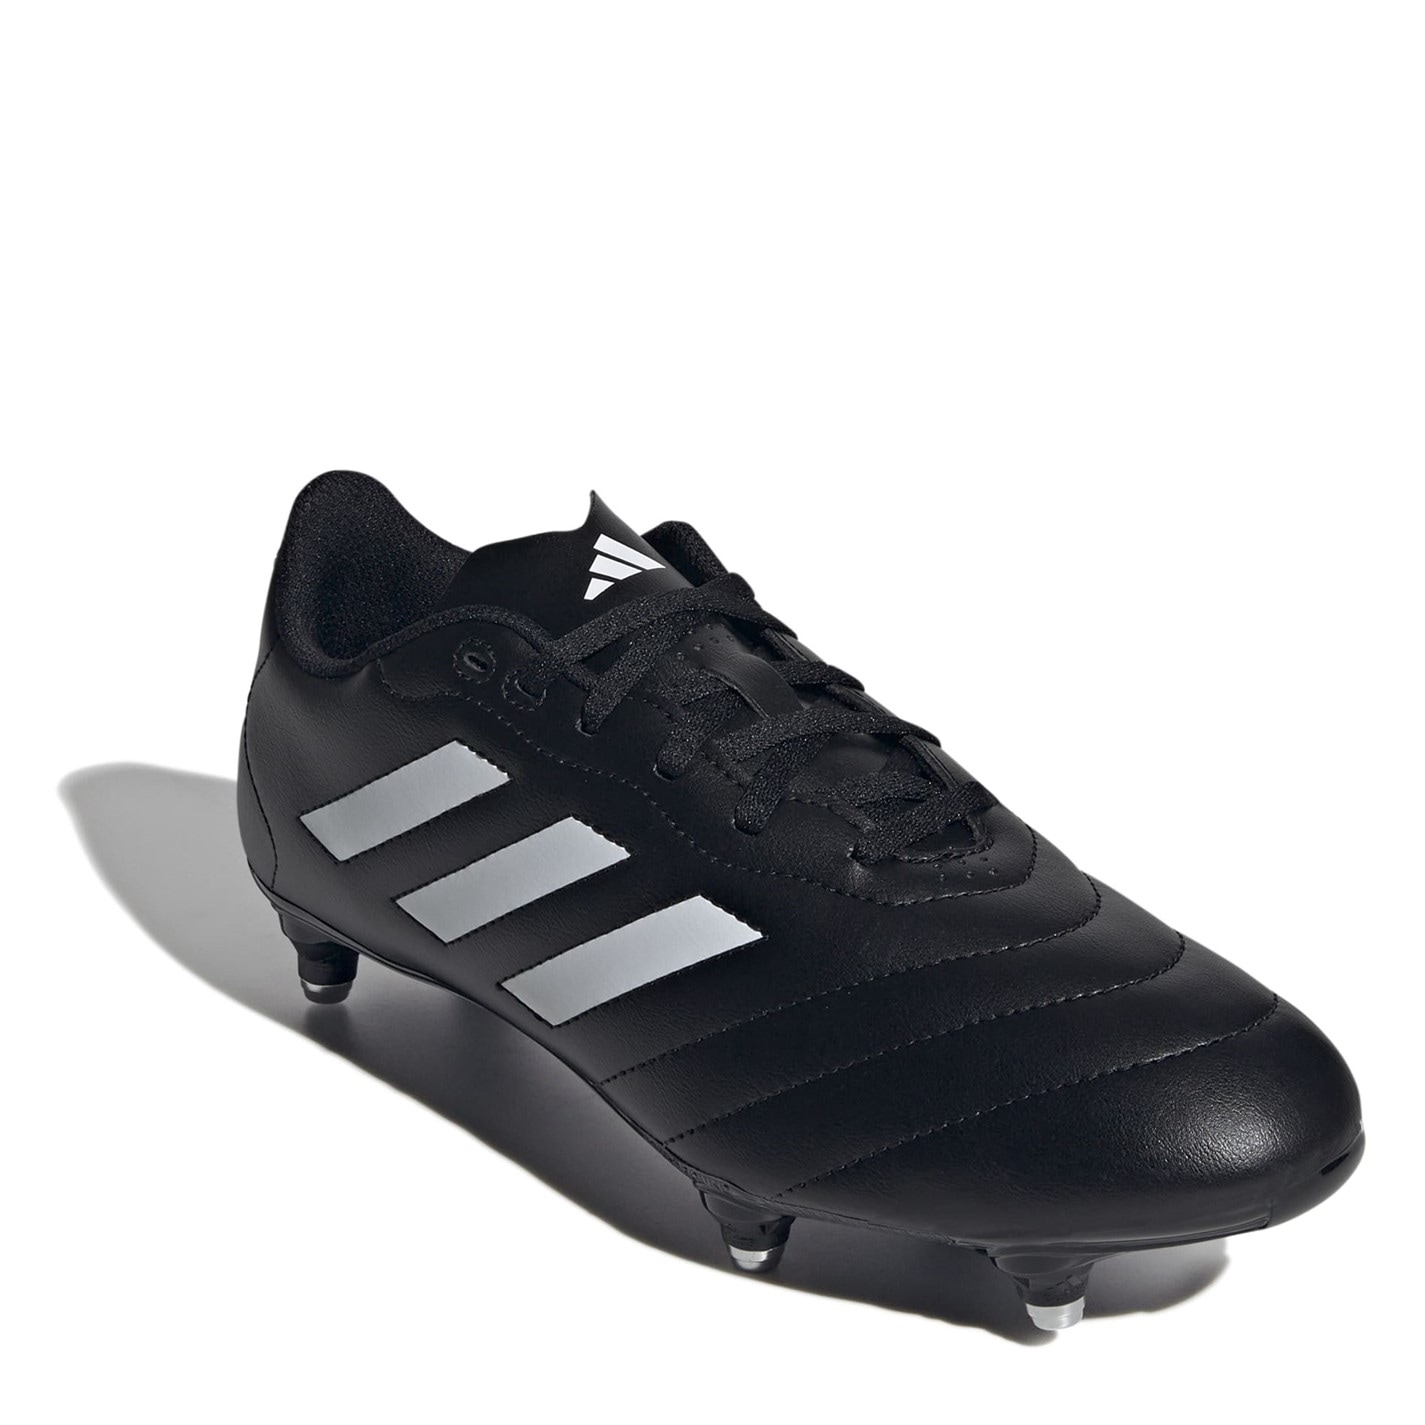 adidas Goletto VIII Soft Ground Football Boots